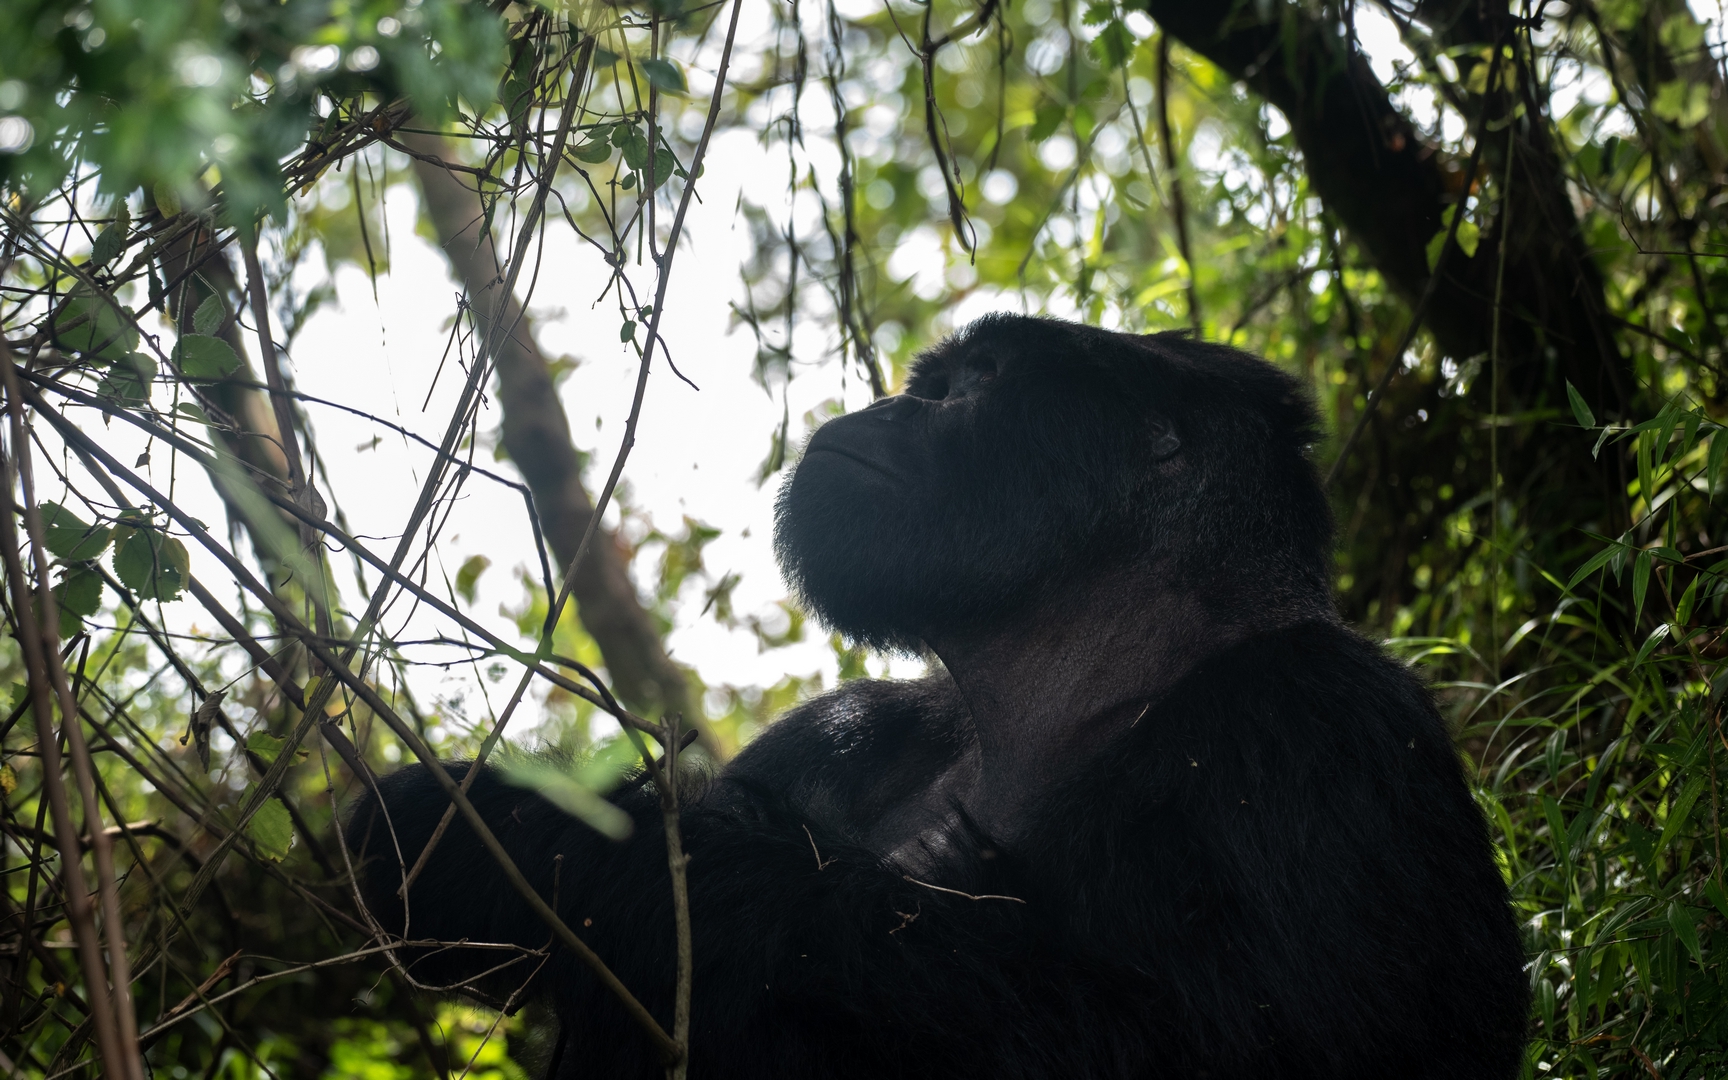 Gorilla Trekking in Bwindi Forest